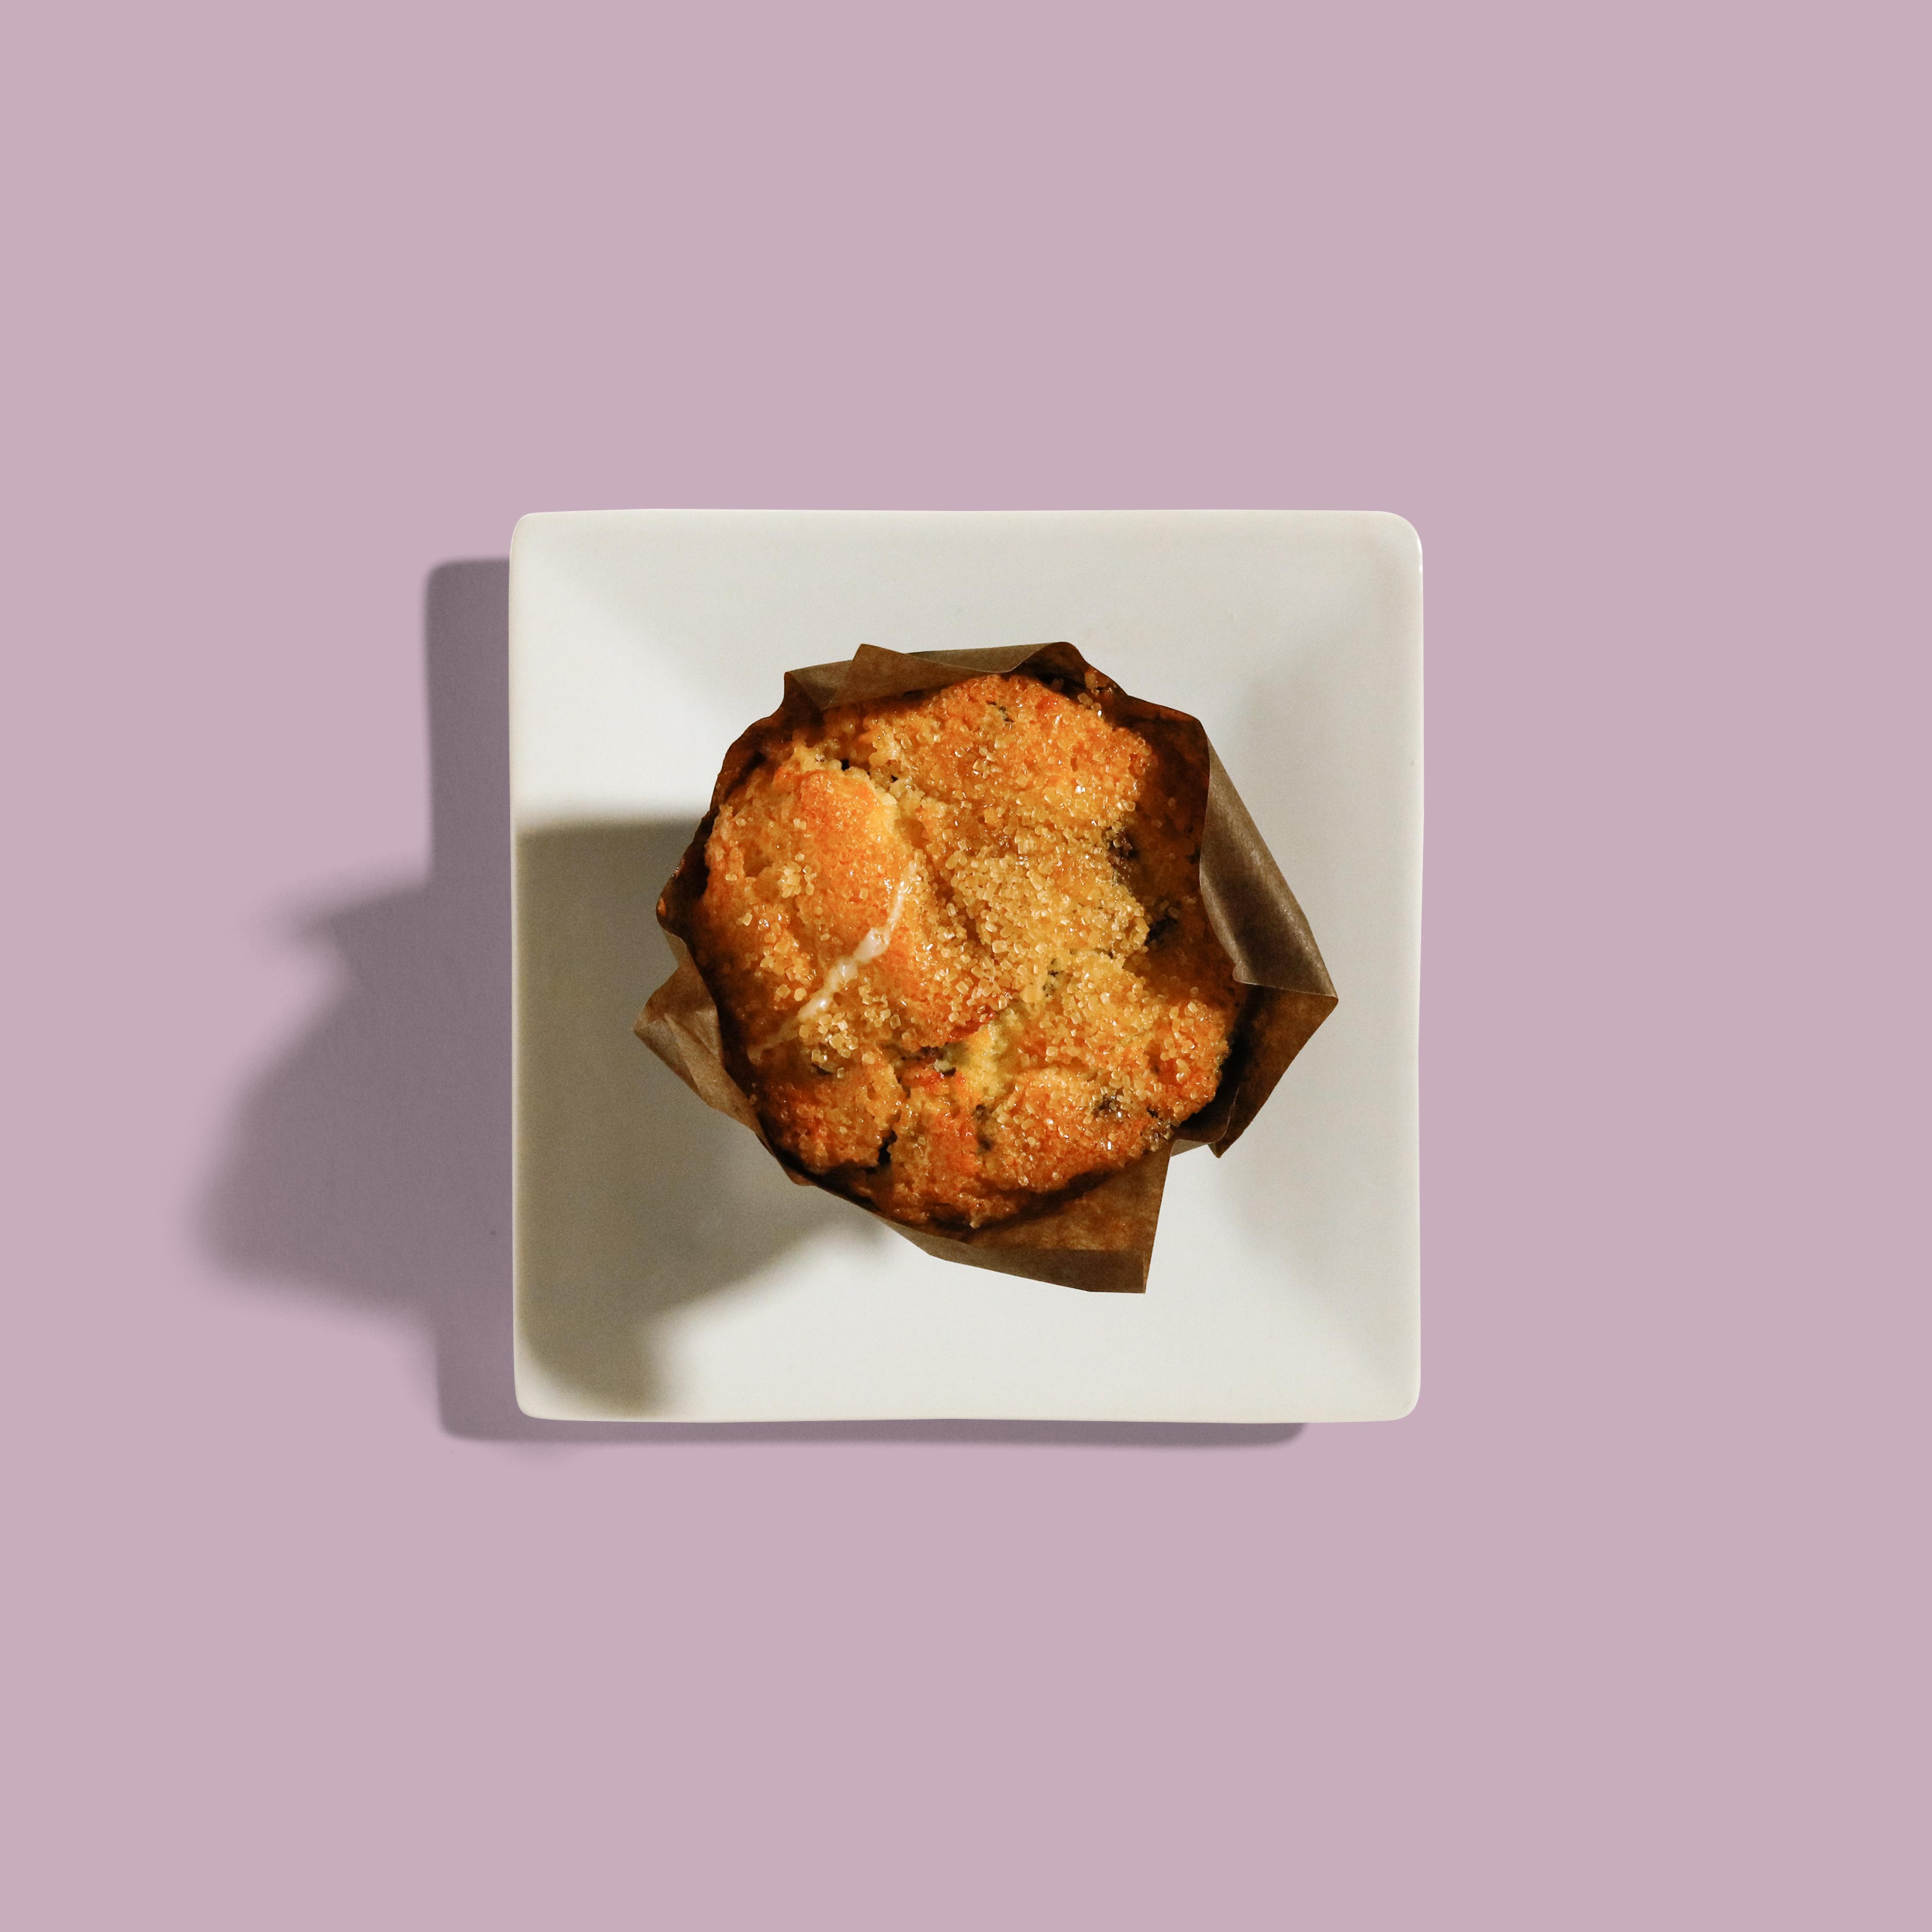 Muffin: Chocolate Chip